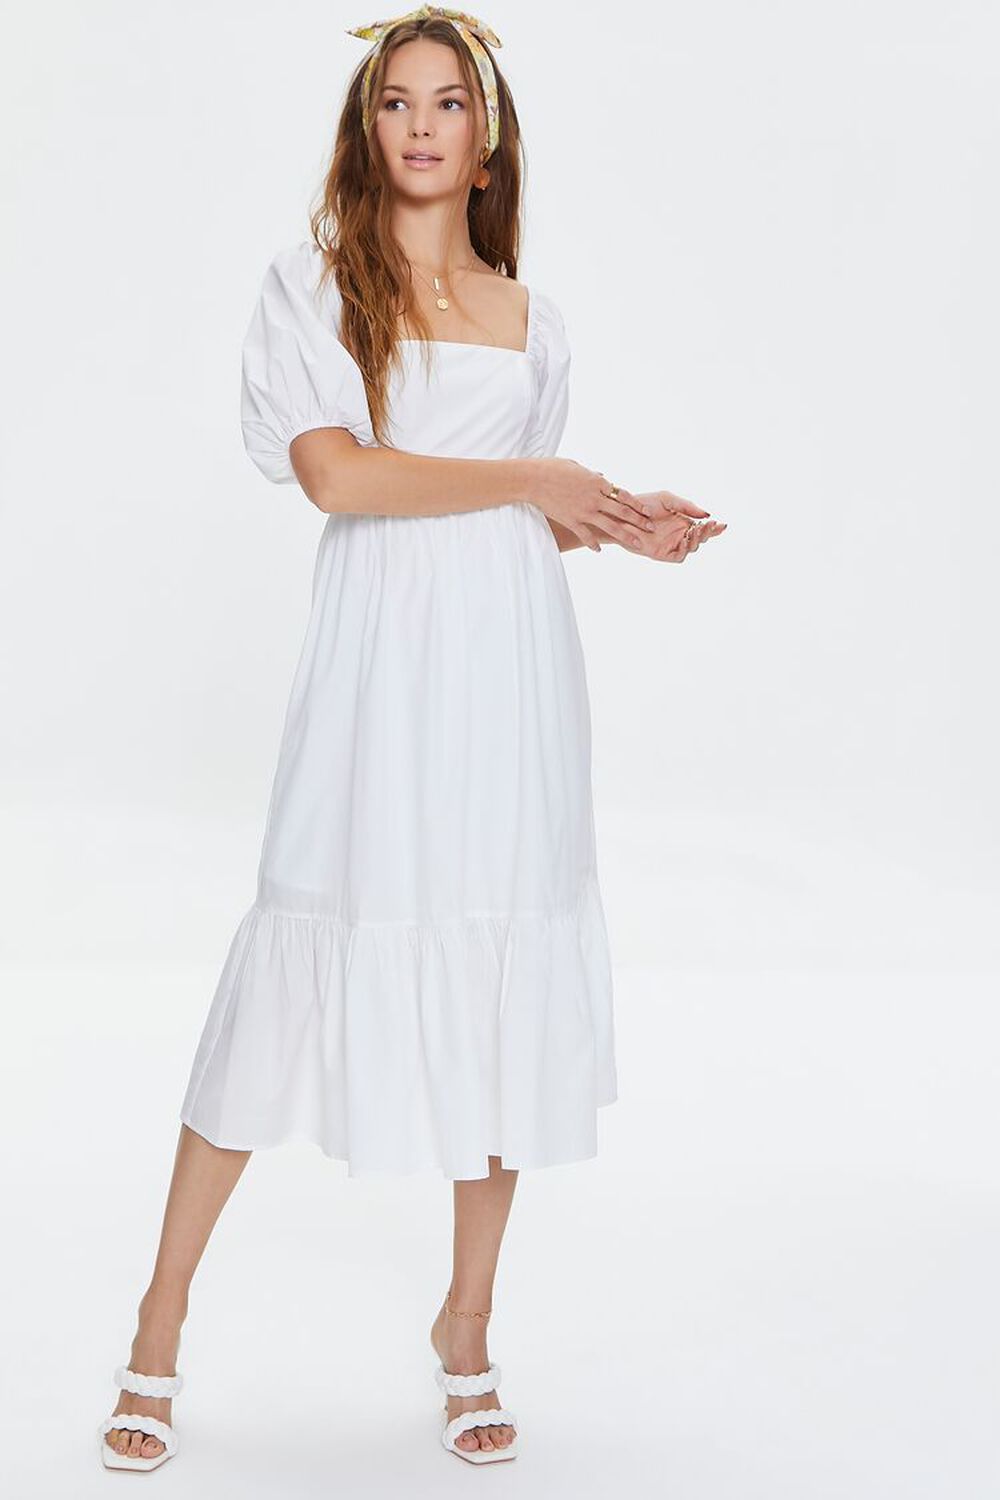 WHITE Puff Sleeve Flounce Dress, image 3